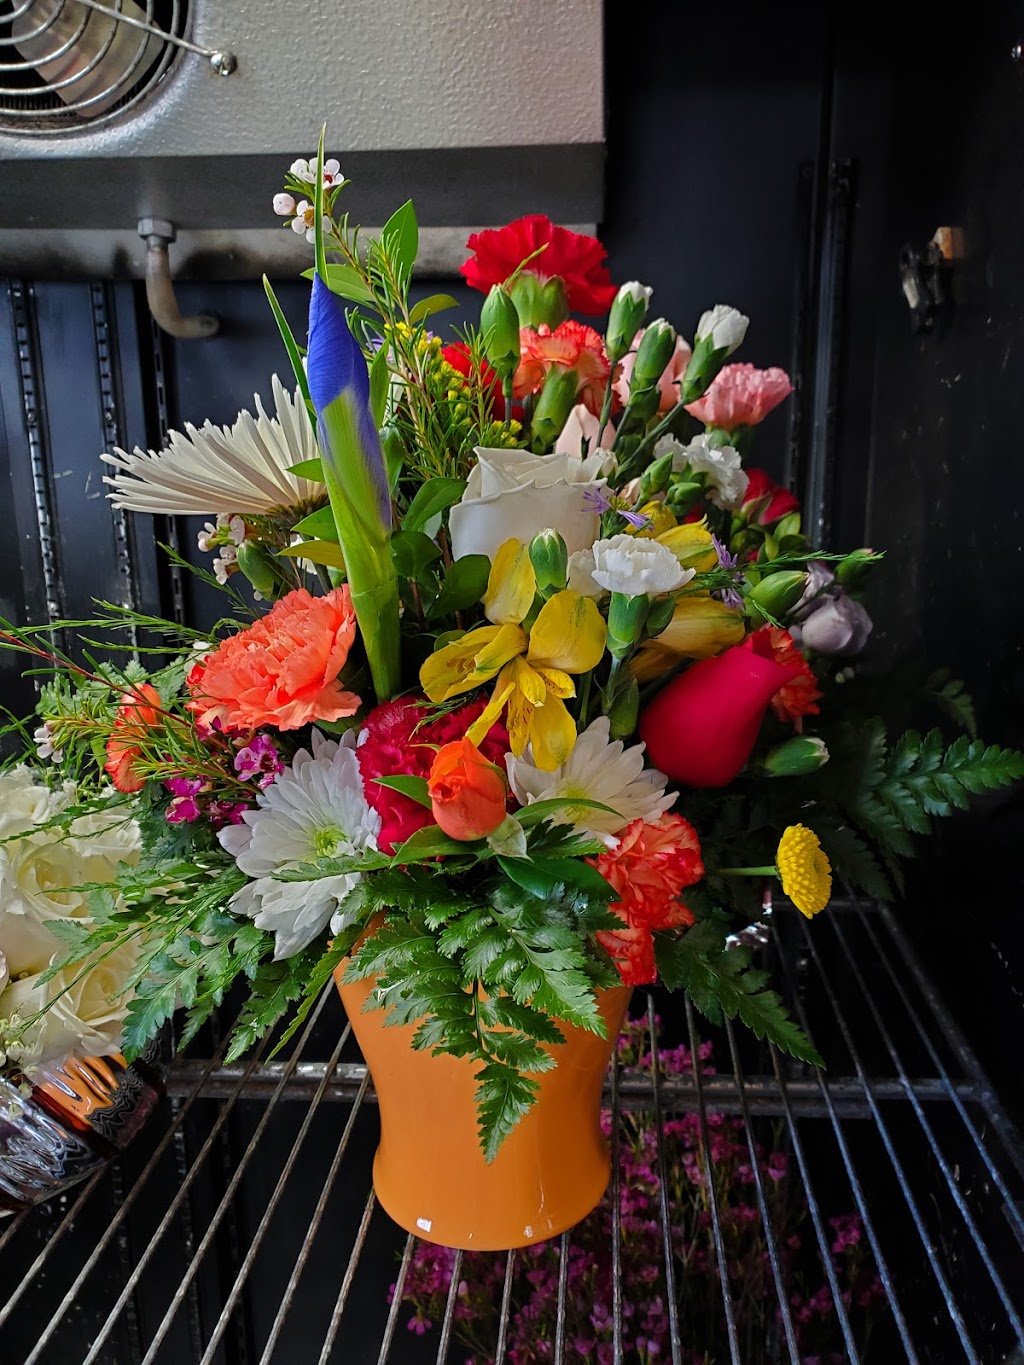 FlowerLoft Florist and Gifts | 275 Miami St, Waynesville, OH 45068 | Phone: (513) 897-4026